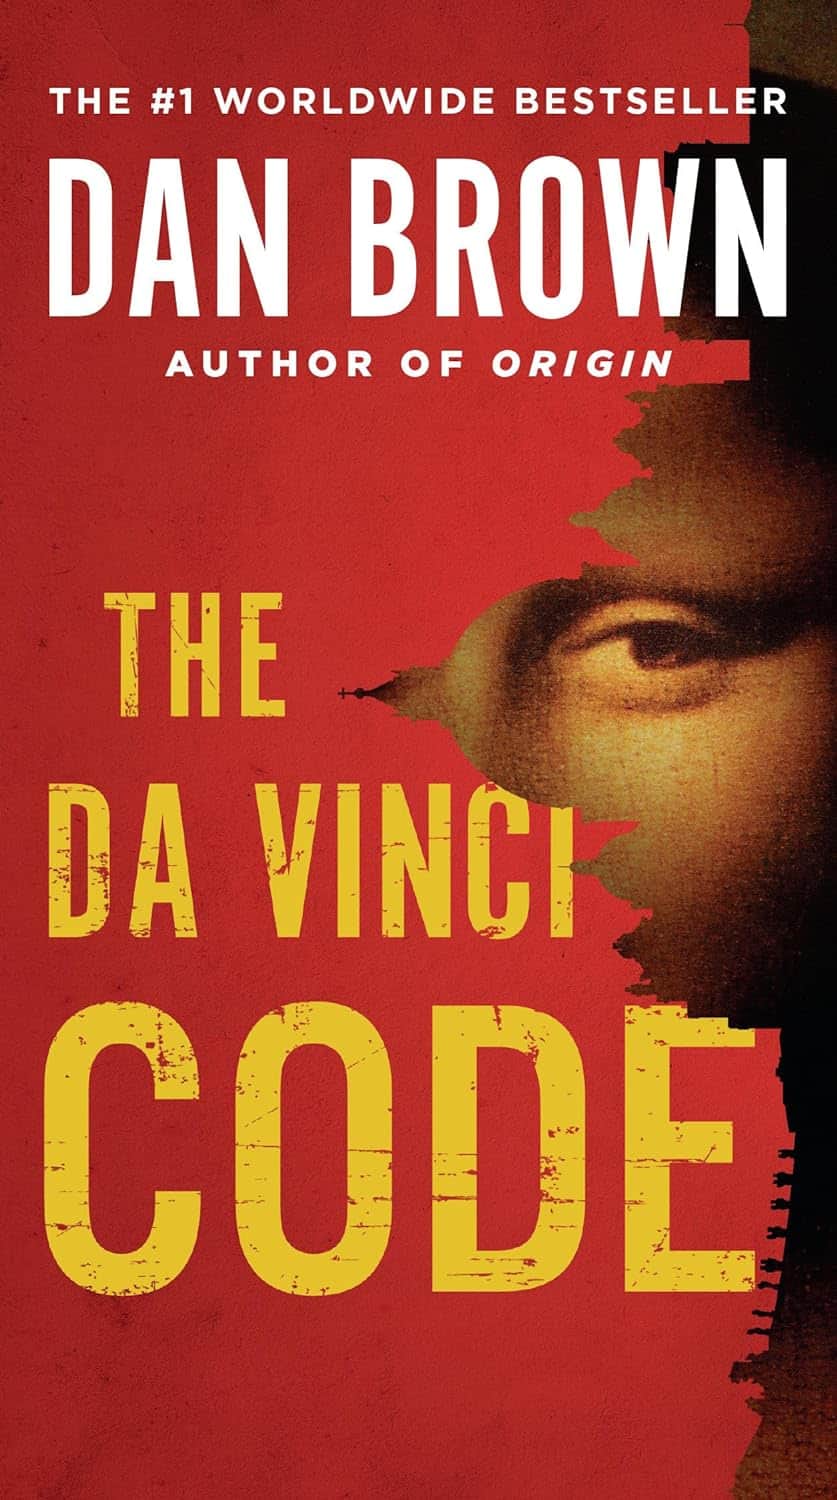 The Da Vinci Code, by Dan Brown